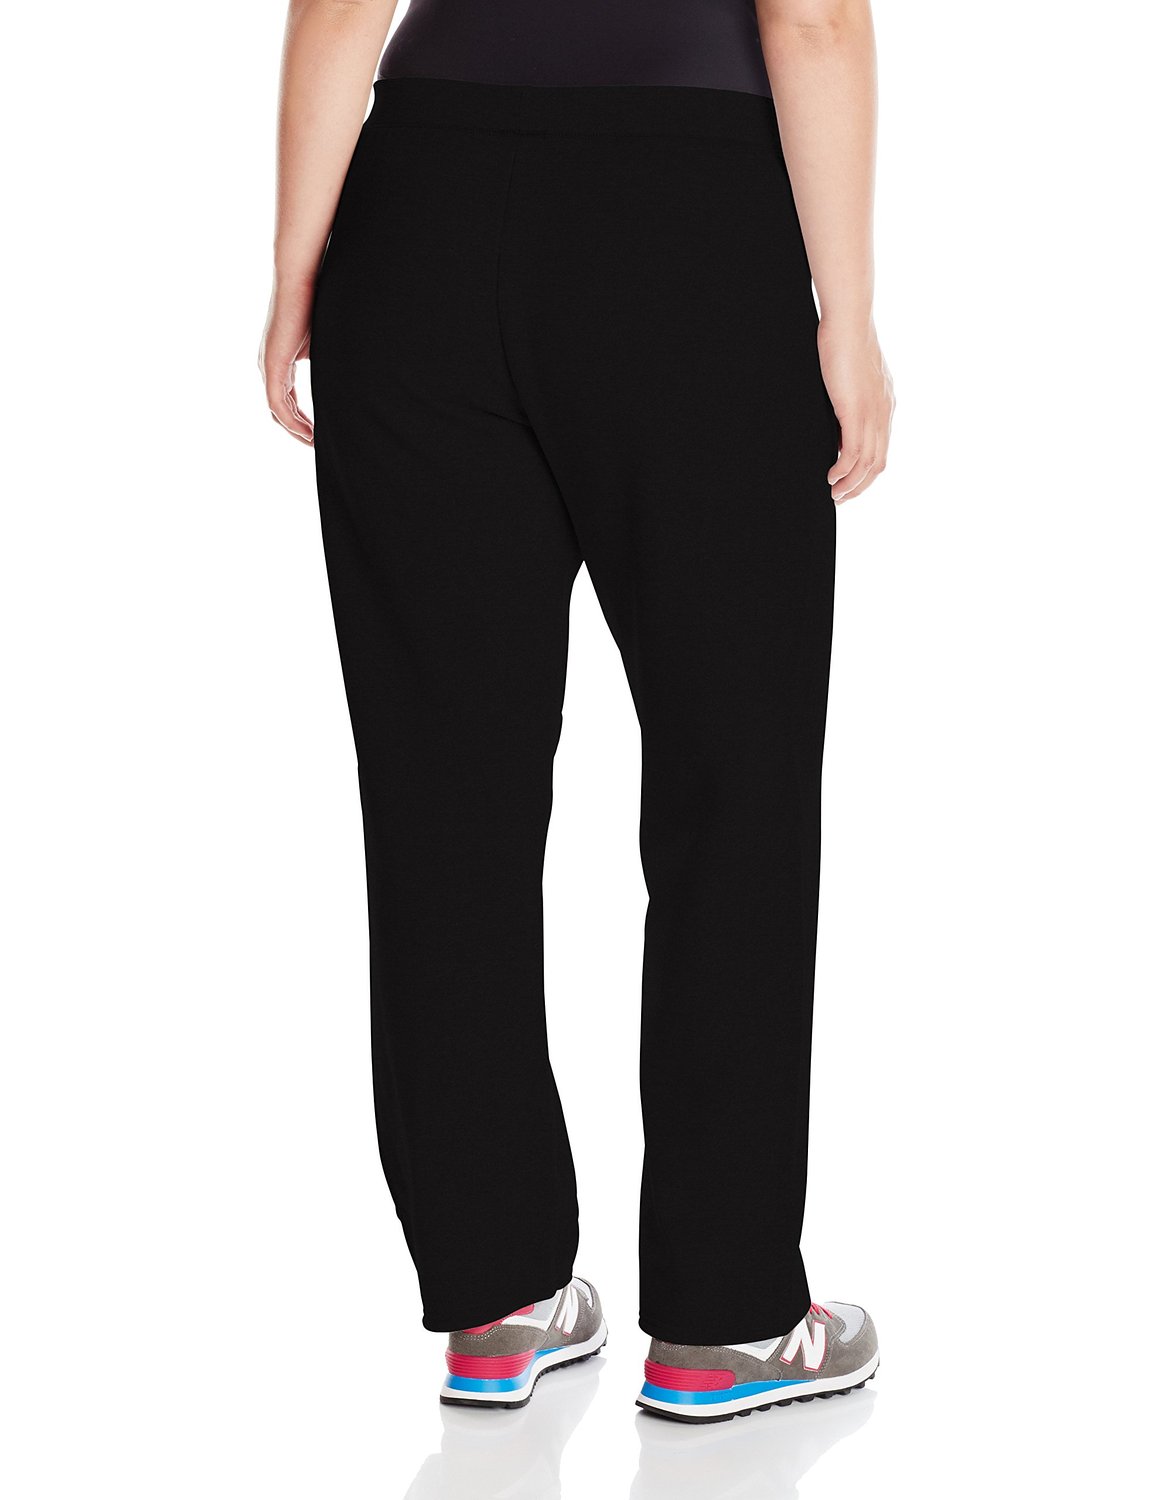 JMS by Hanes Women's Plus Size Fleece Sweatpants (Also Petite Sizes) - image 2 of 6